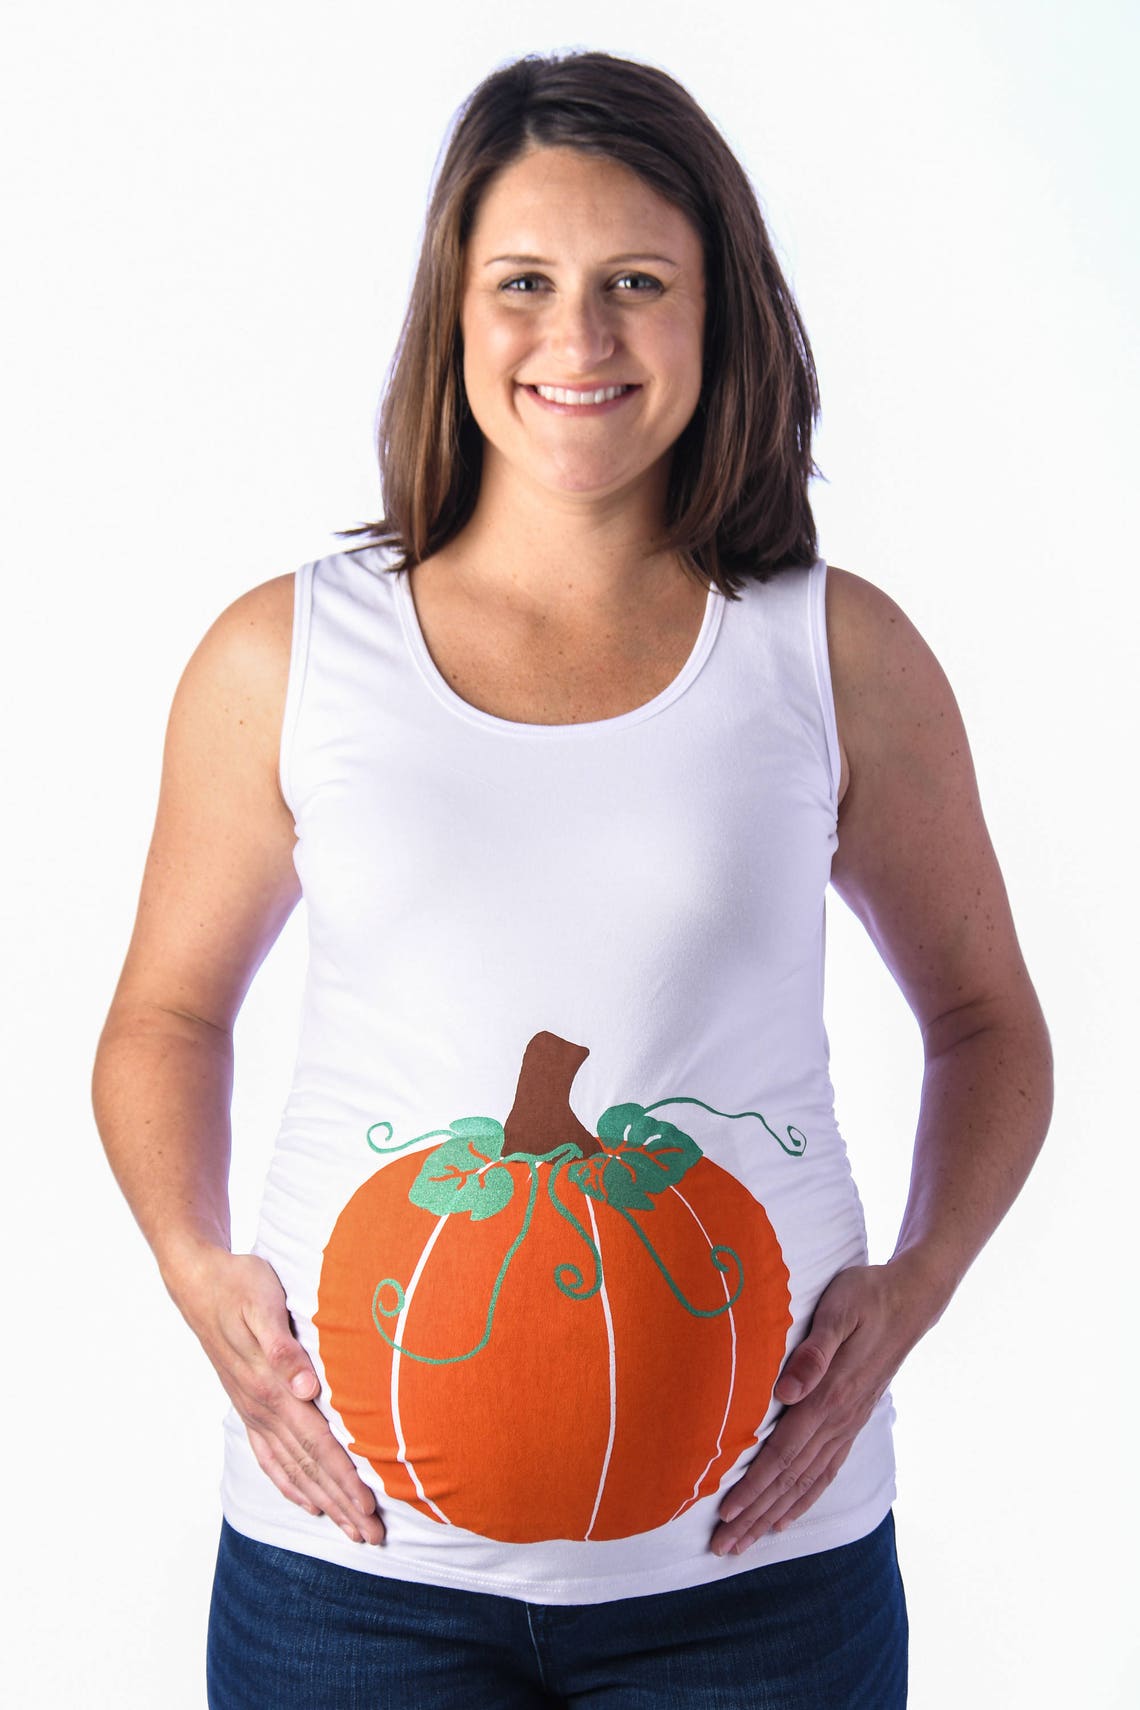 Pumpkin Maternity Shirt, Halloween maternity Shirt, Pregnant Halloween Costume, Pumpkin Spice Gender Reveal, Funny maternity, white tee